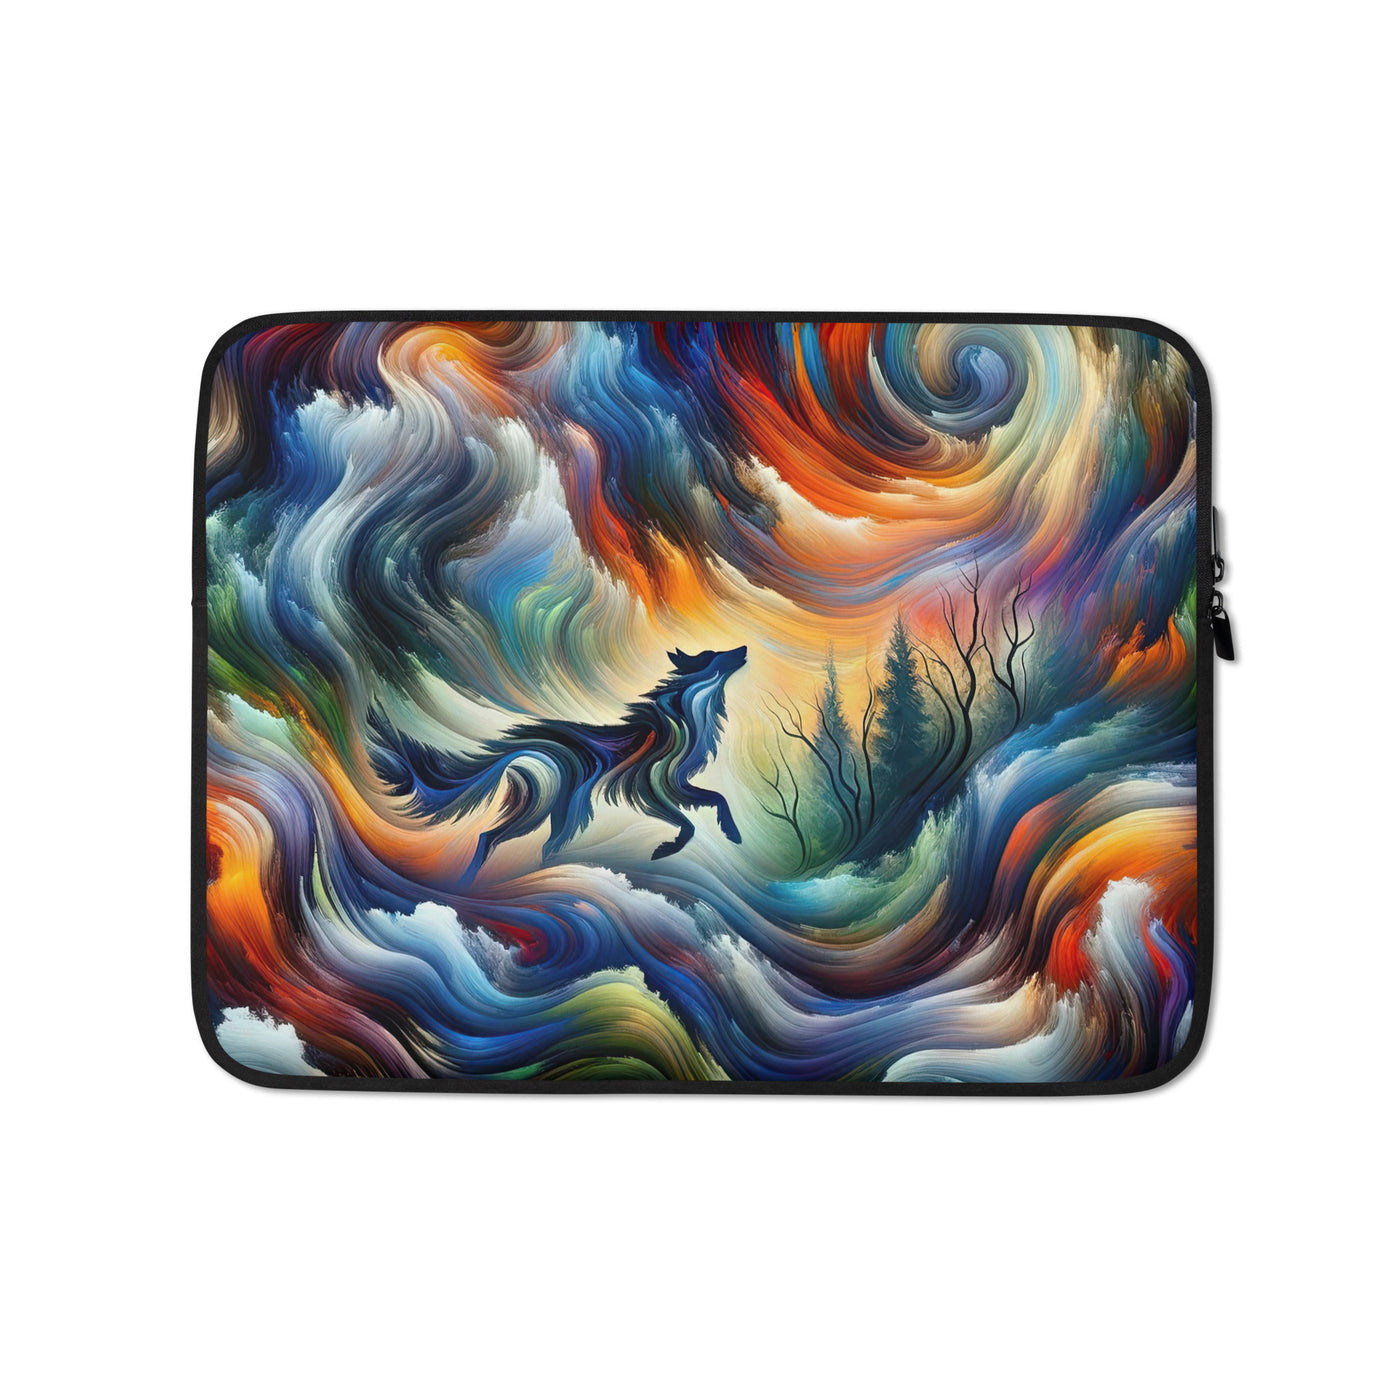 Alpen Abstraktgemälde mit Wolf Silhouette in lebhaften Farben (AN) - Laptophülle xxx yyy zzz 13″